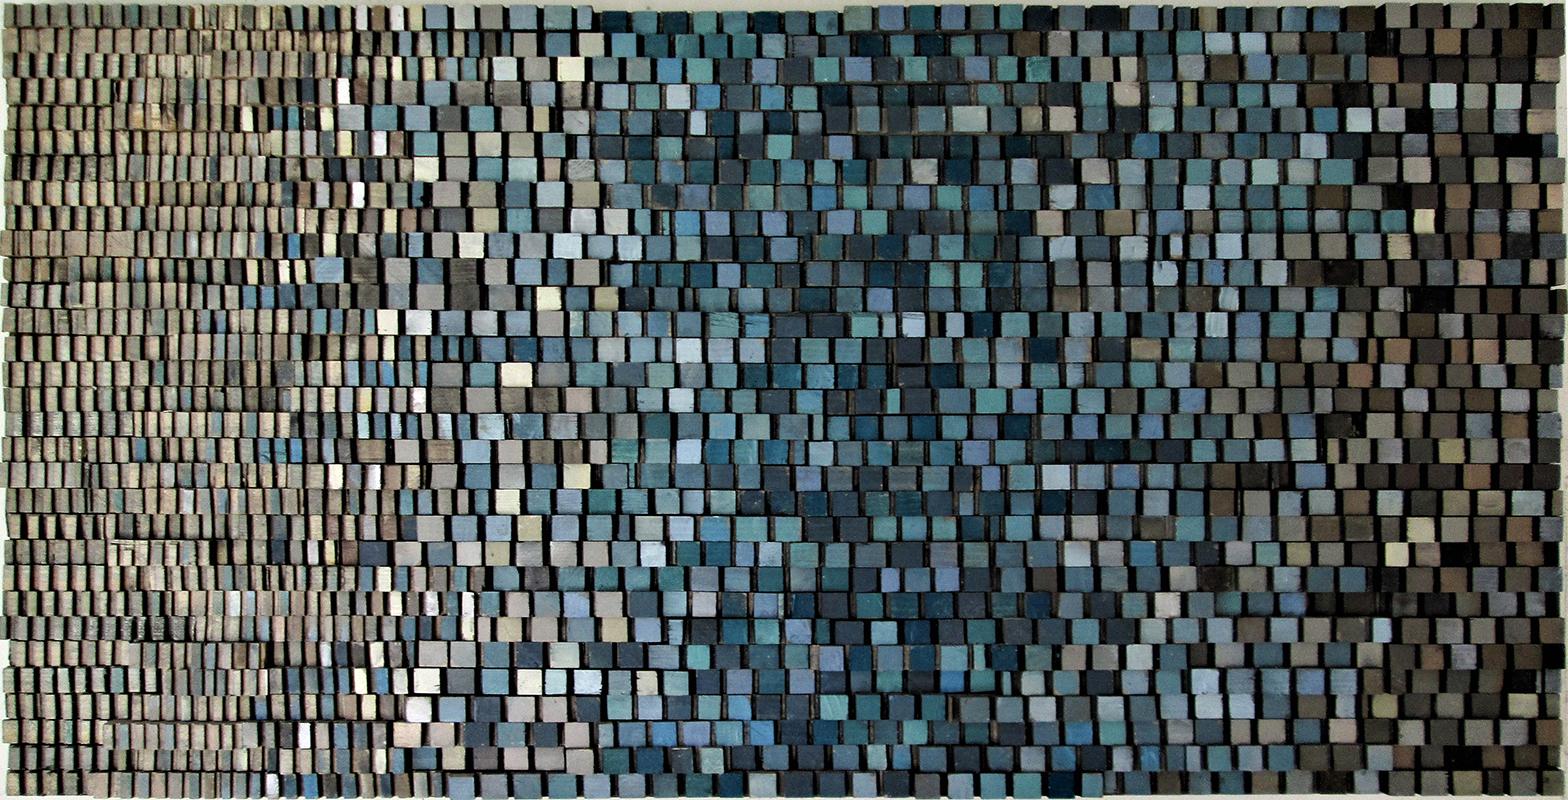 Stephen Walling Abstract Sculpture – Fade In (Dreidimensionale dreidimensionale Holz-Wandskulptur in abstraktem Blau)